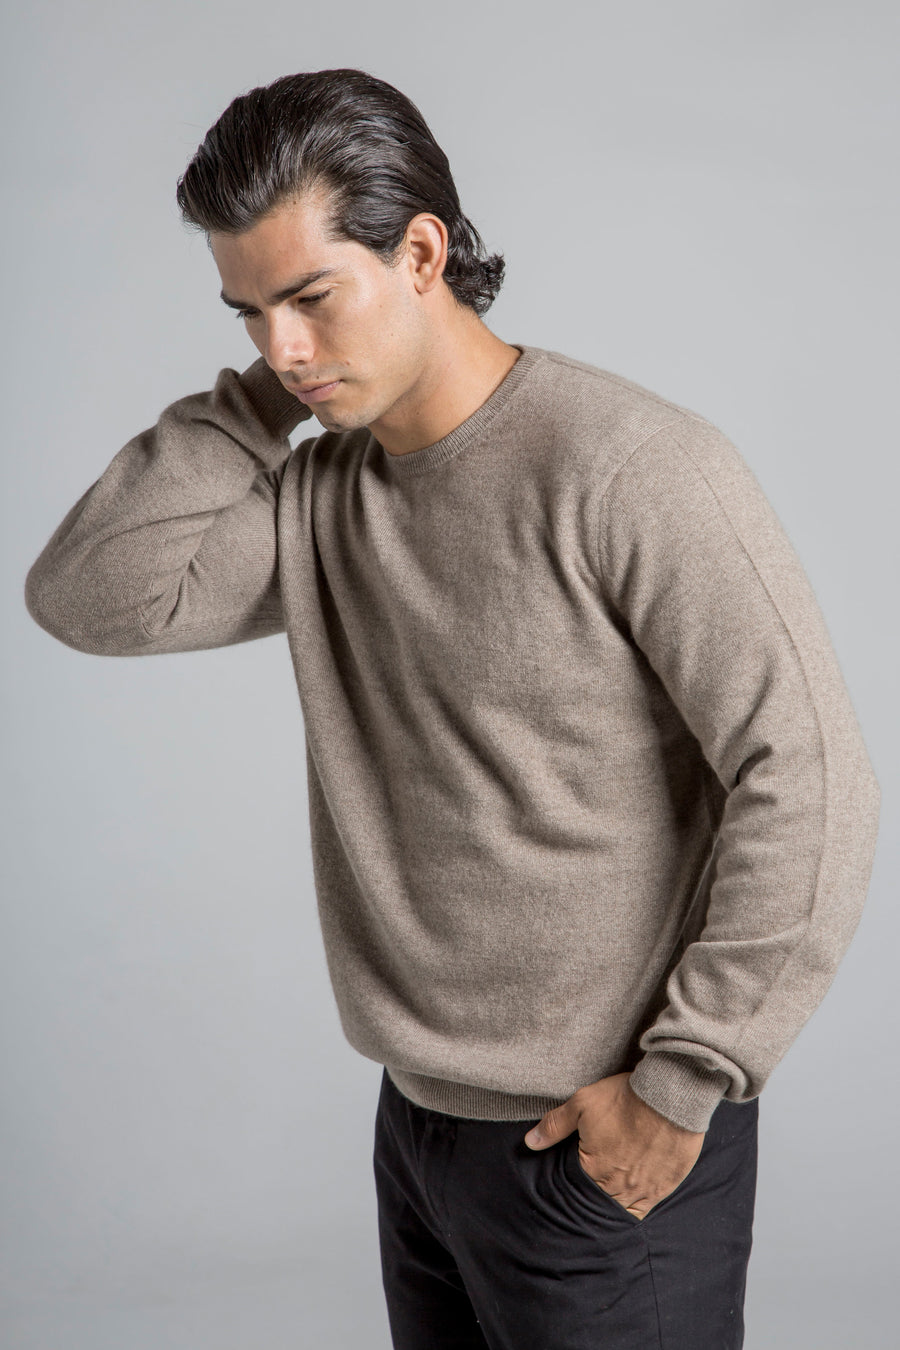 pine cashmere mens classic 100% pure organic cashmere crewneck sweater in brown